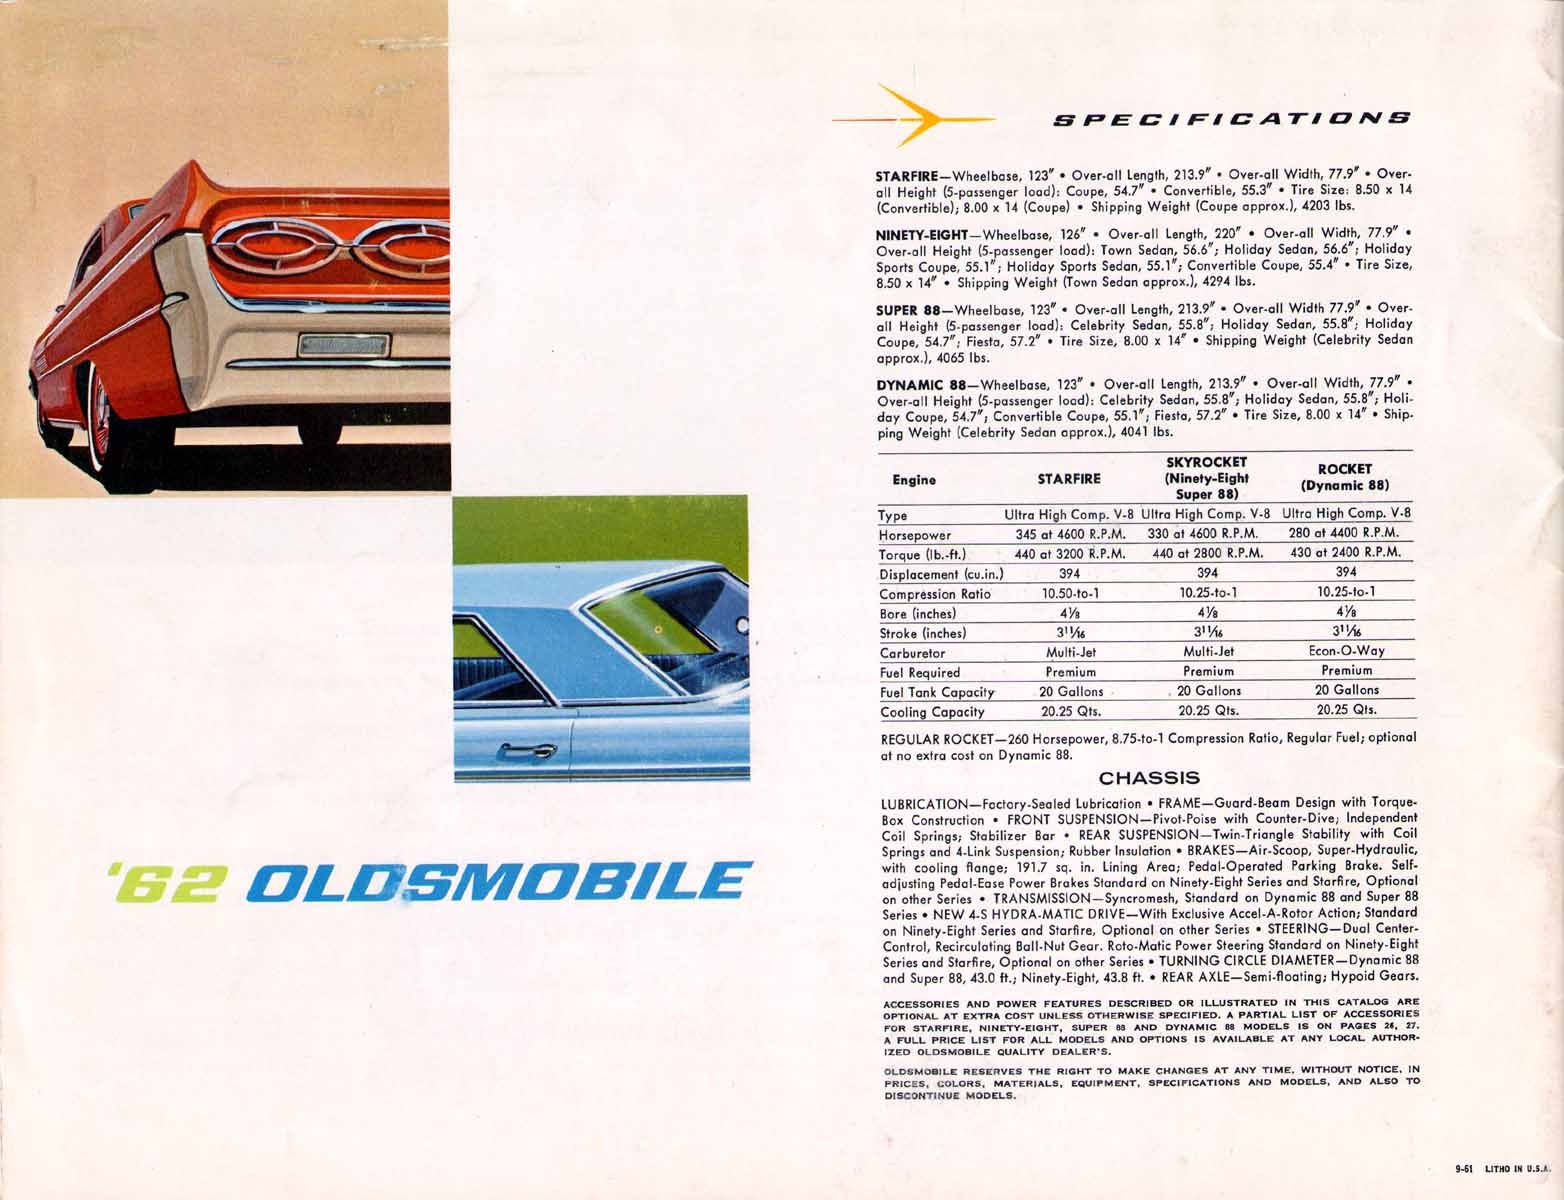 1962 Oldsmobile Full Line Brochure Page 1